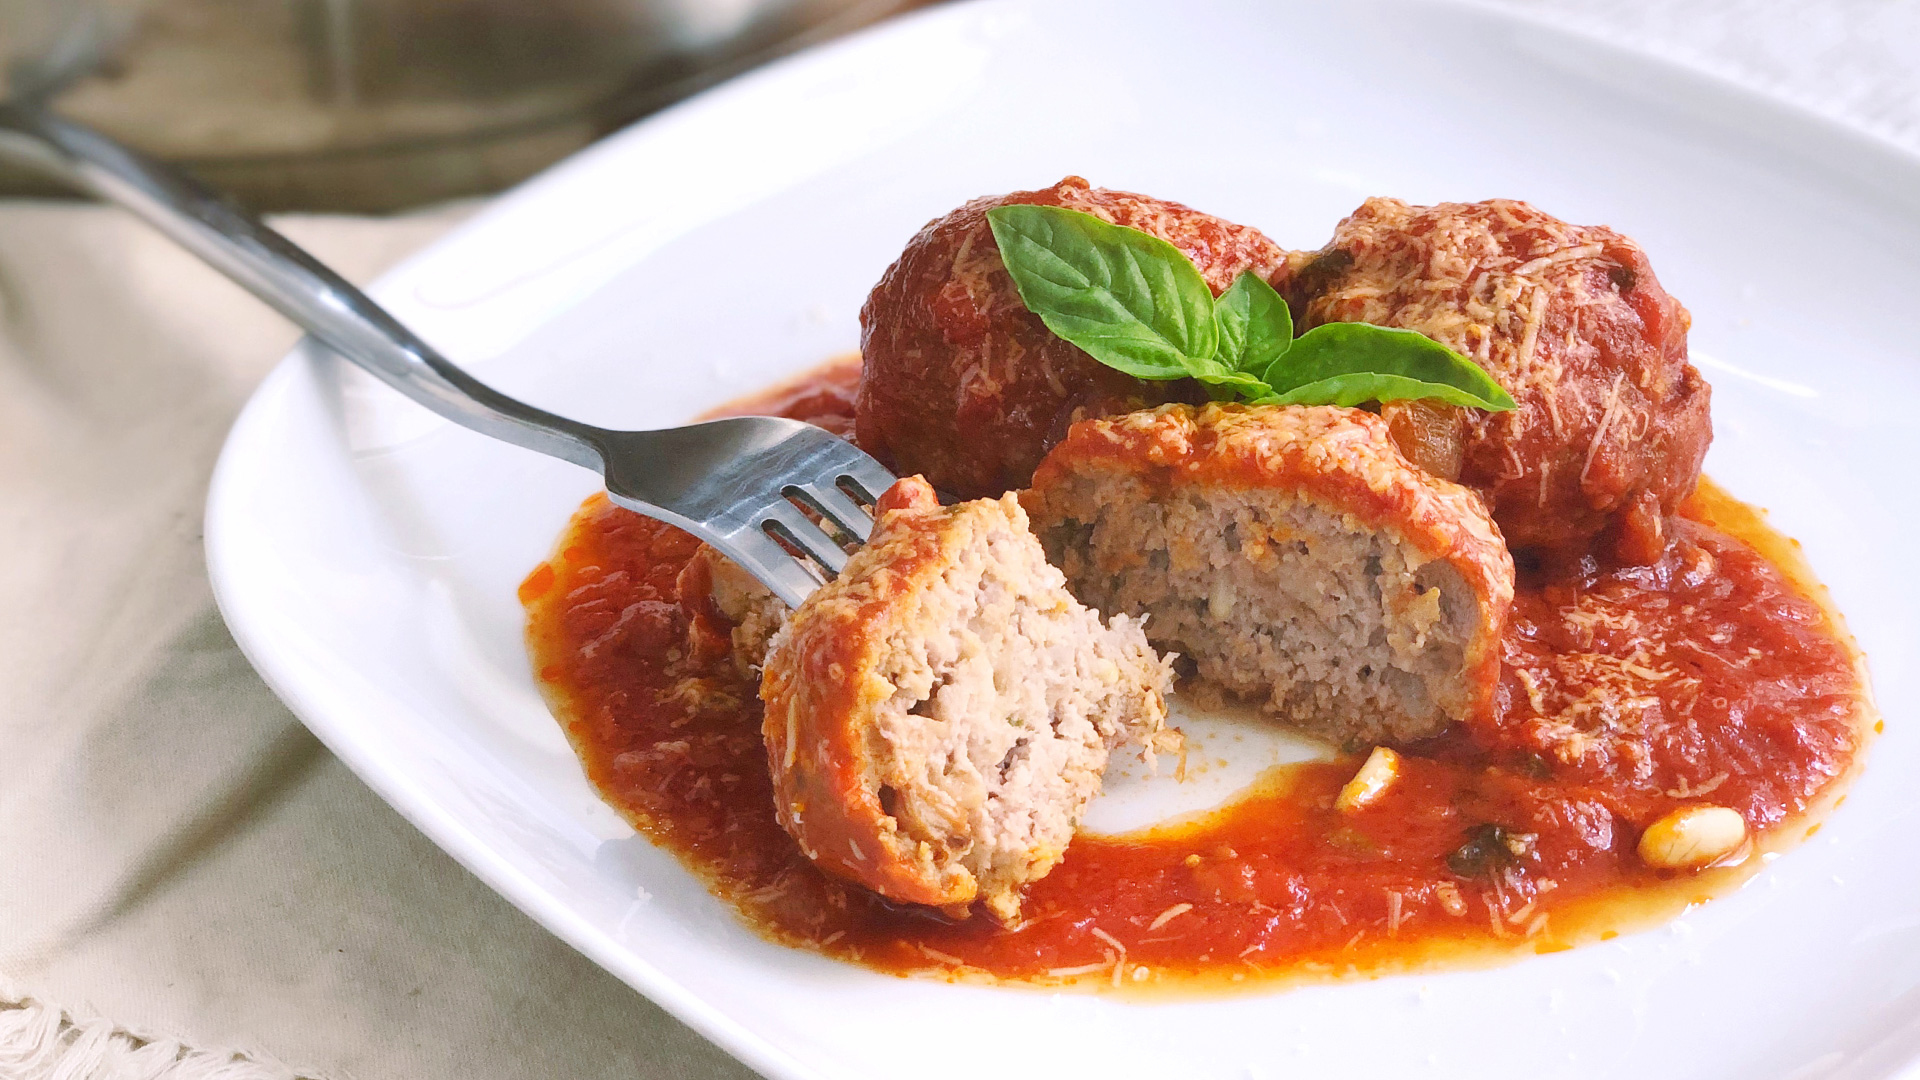  How to Make Italian Meatball in Tomato Sauce ricette di ricette natale bento 